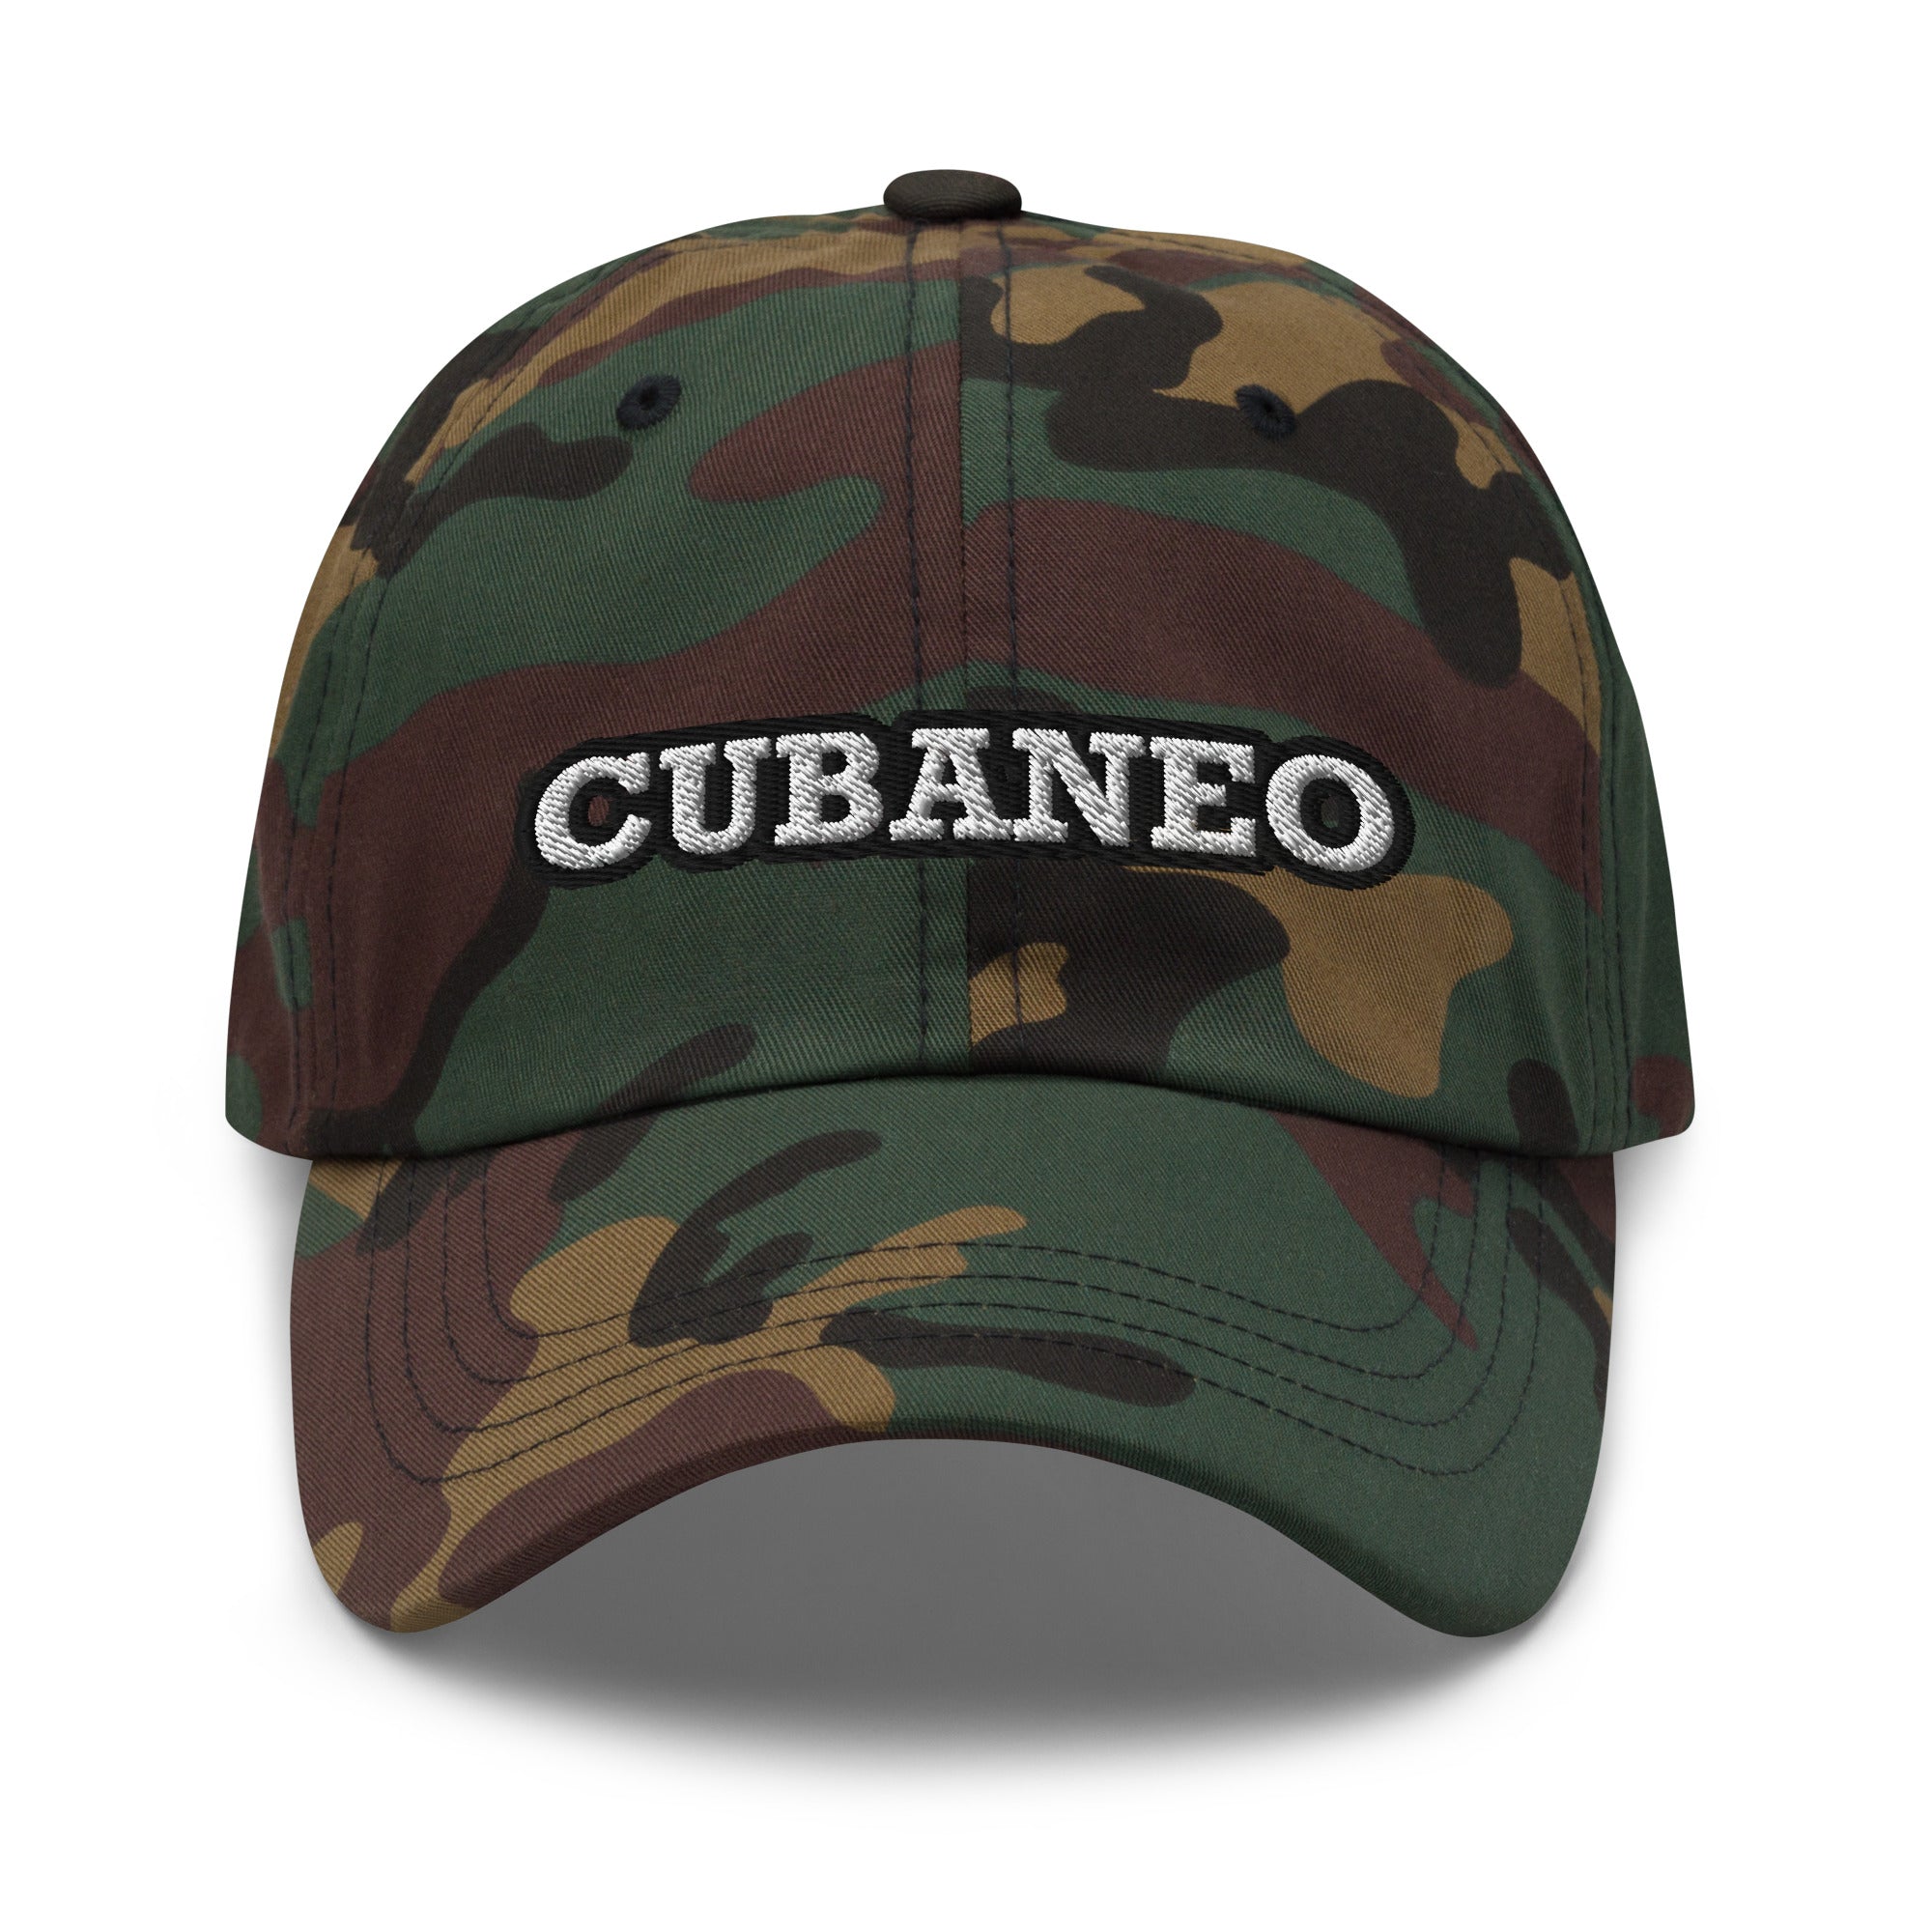 Cubaneo | Gorra dad hat